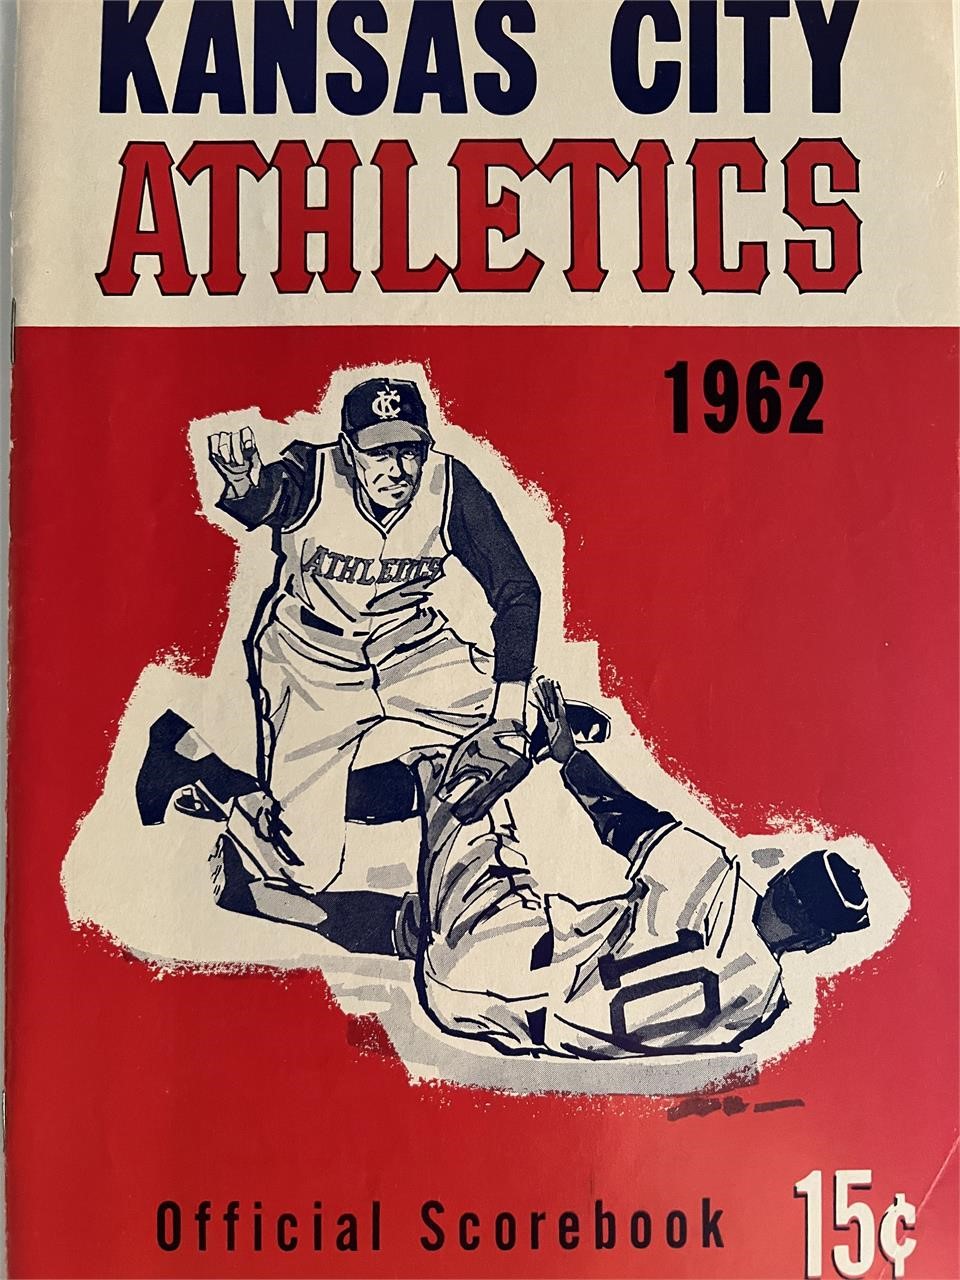 1962 Kansas City Athletics Scorebook. 7x10 inches